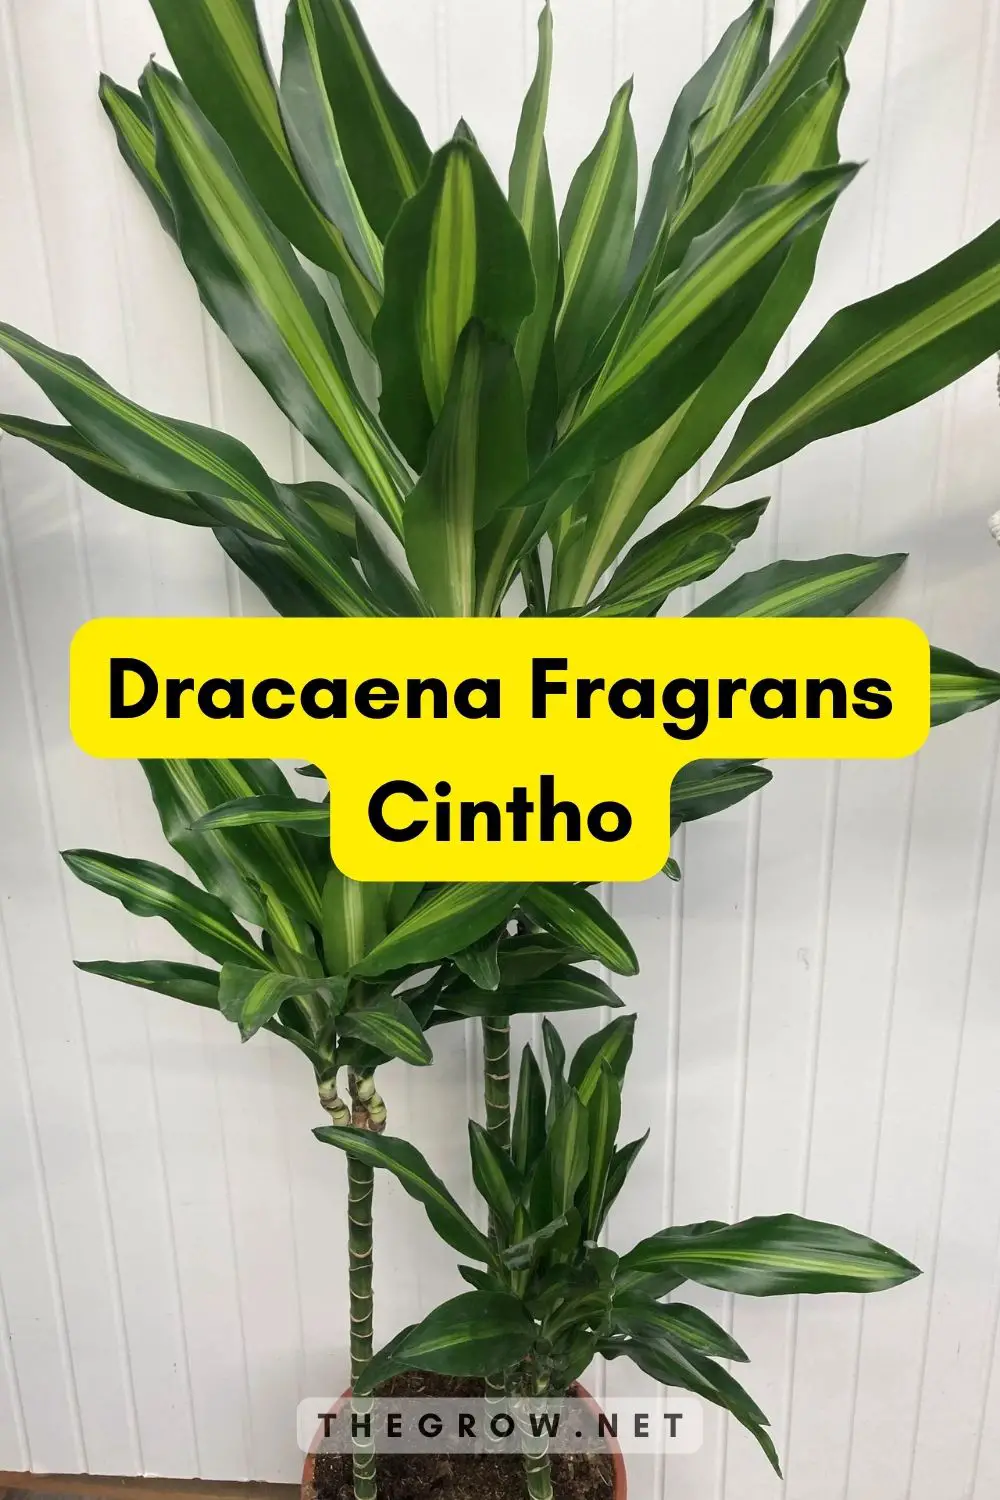 Dracaena Fragrans Cintho